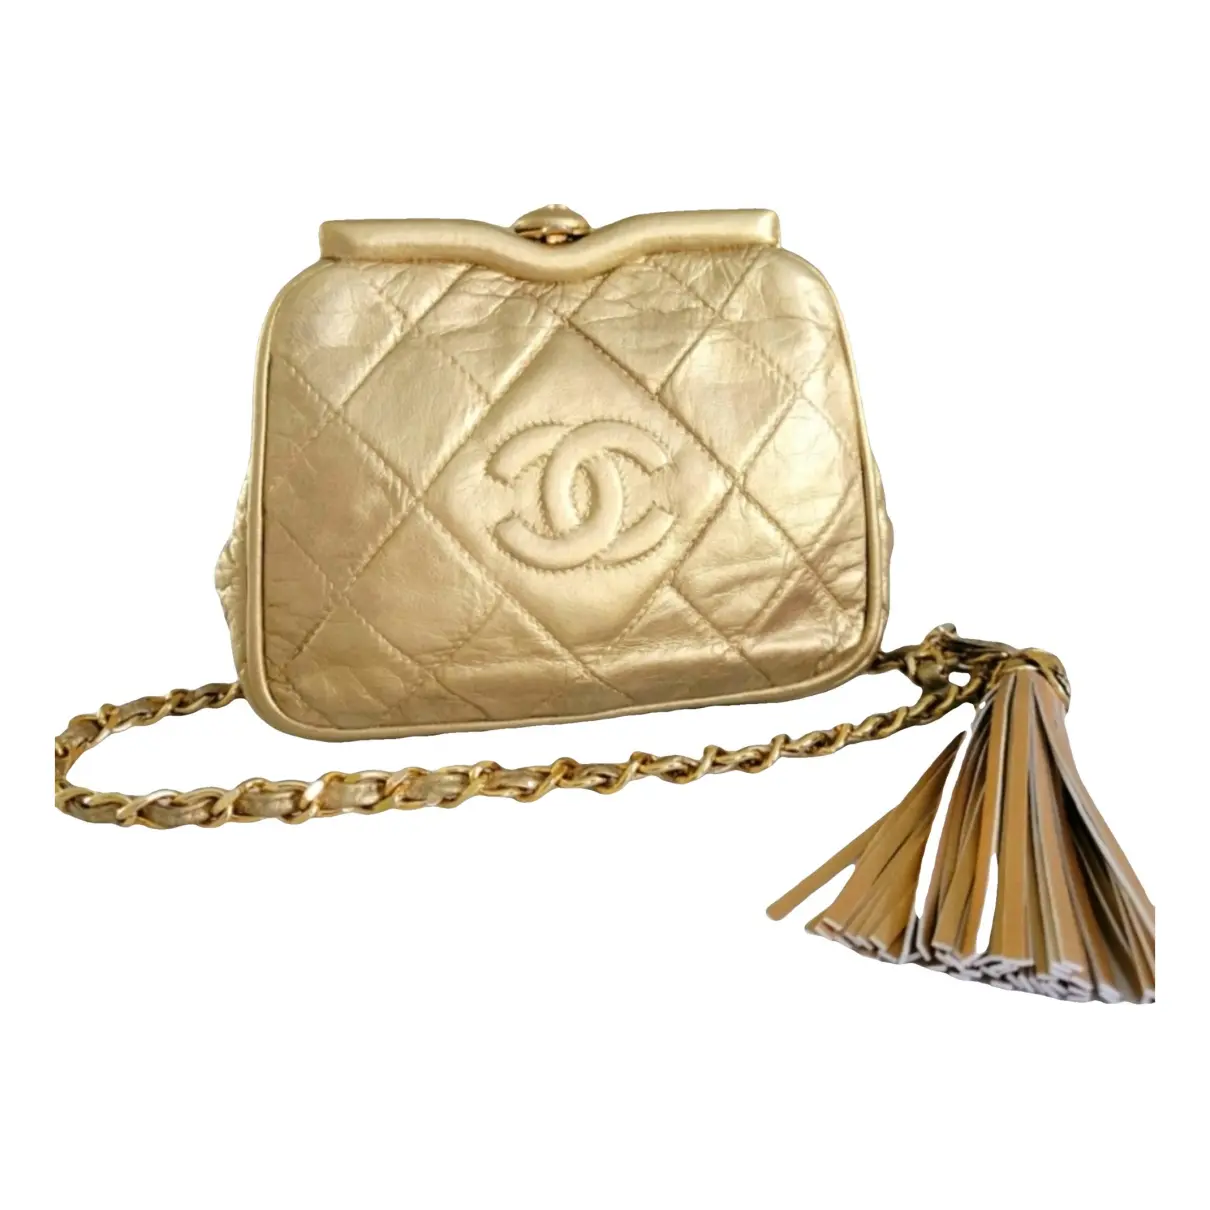 Chanel 19 leather crossbody bag